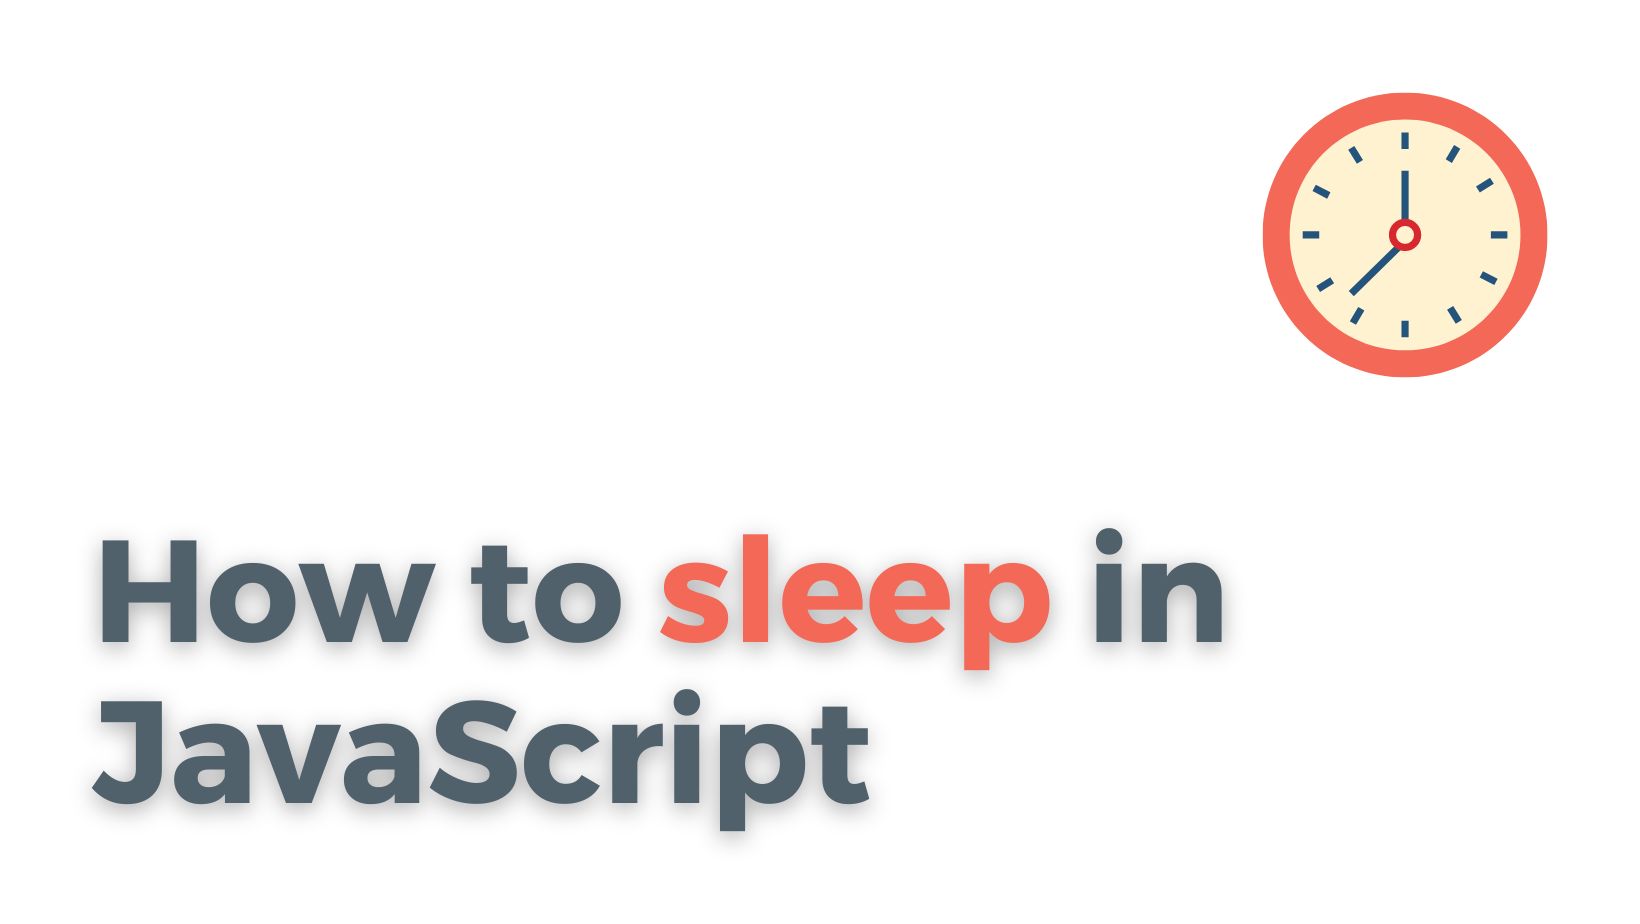 How to sleep in JavaScript